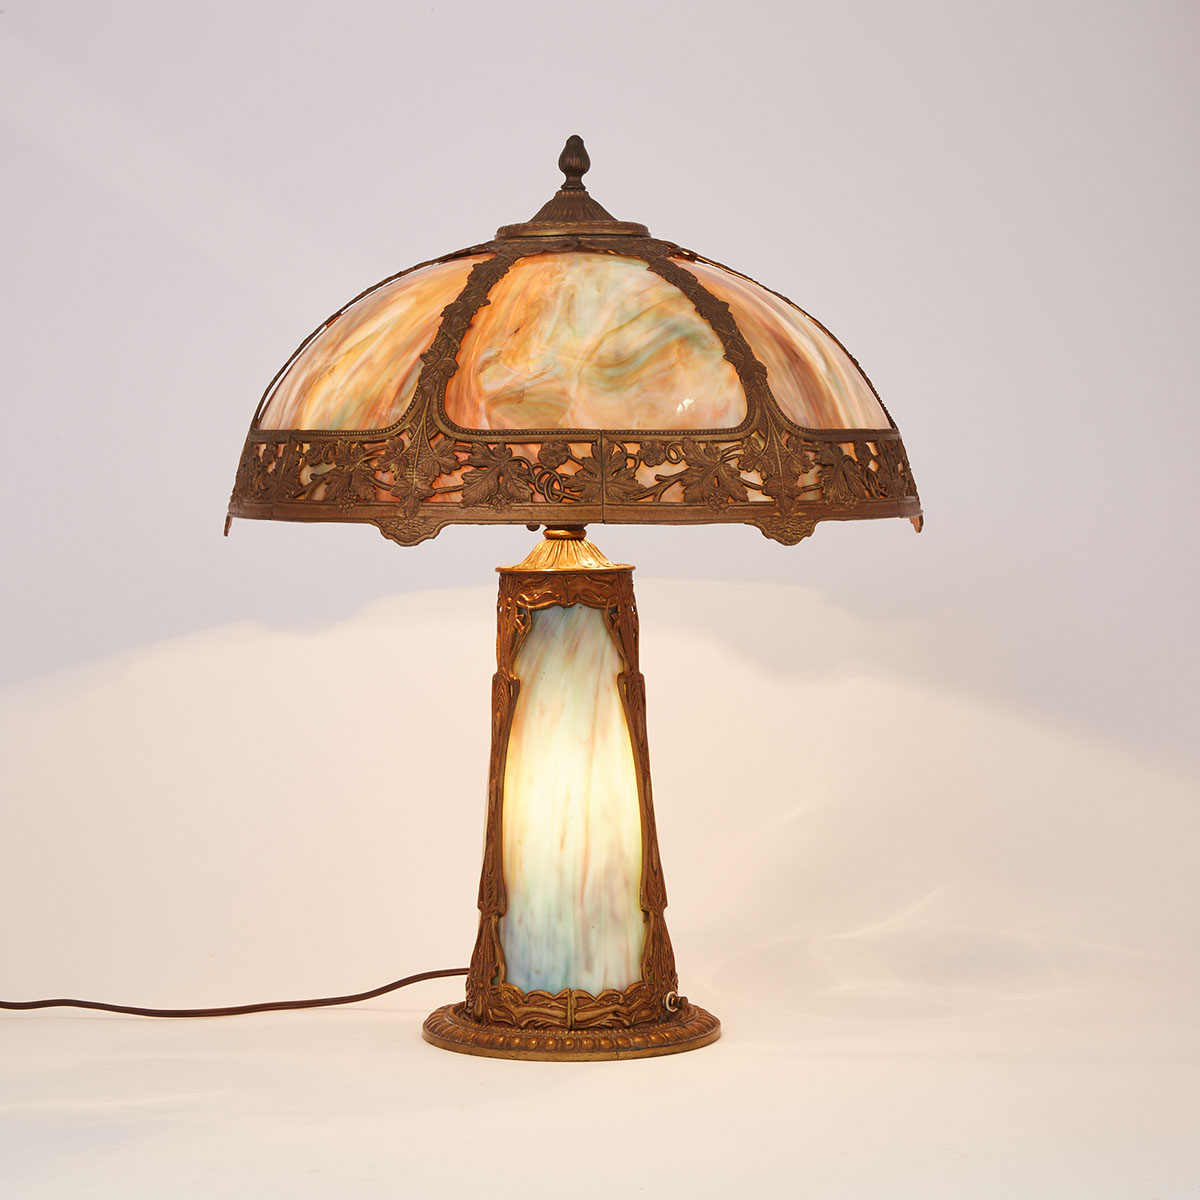 American Slag Glass Table Lamp with Illuminated Base, c.1900